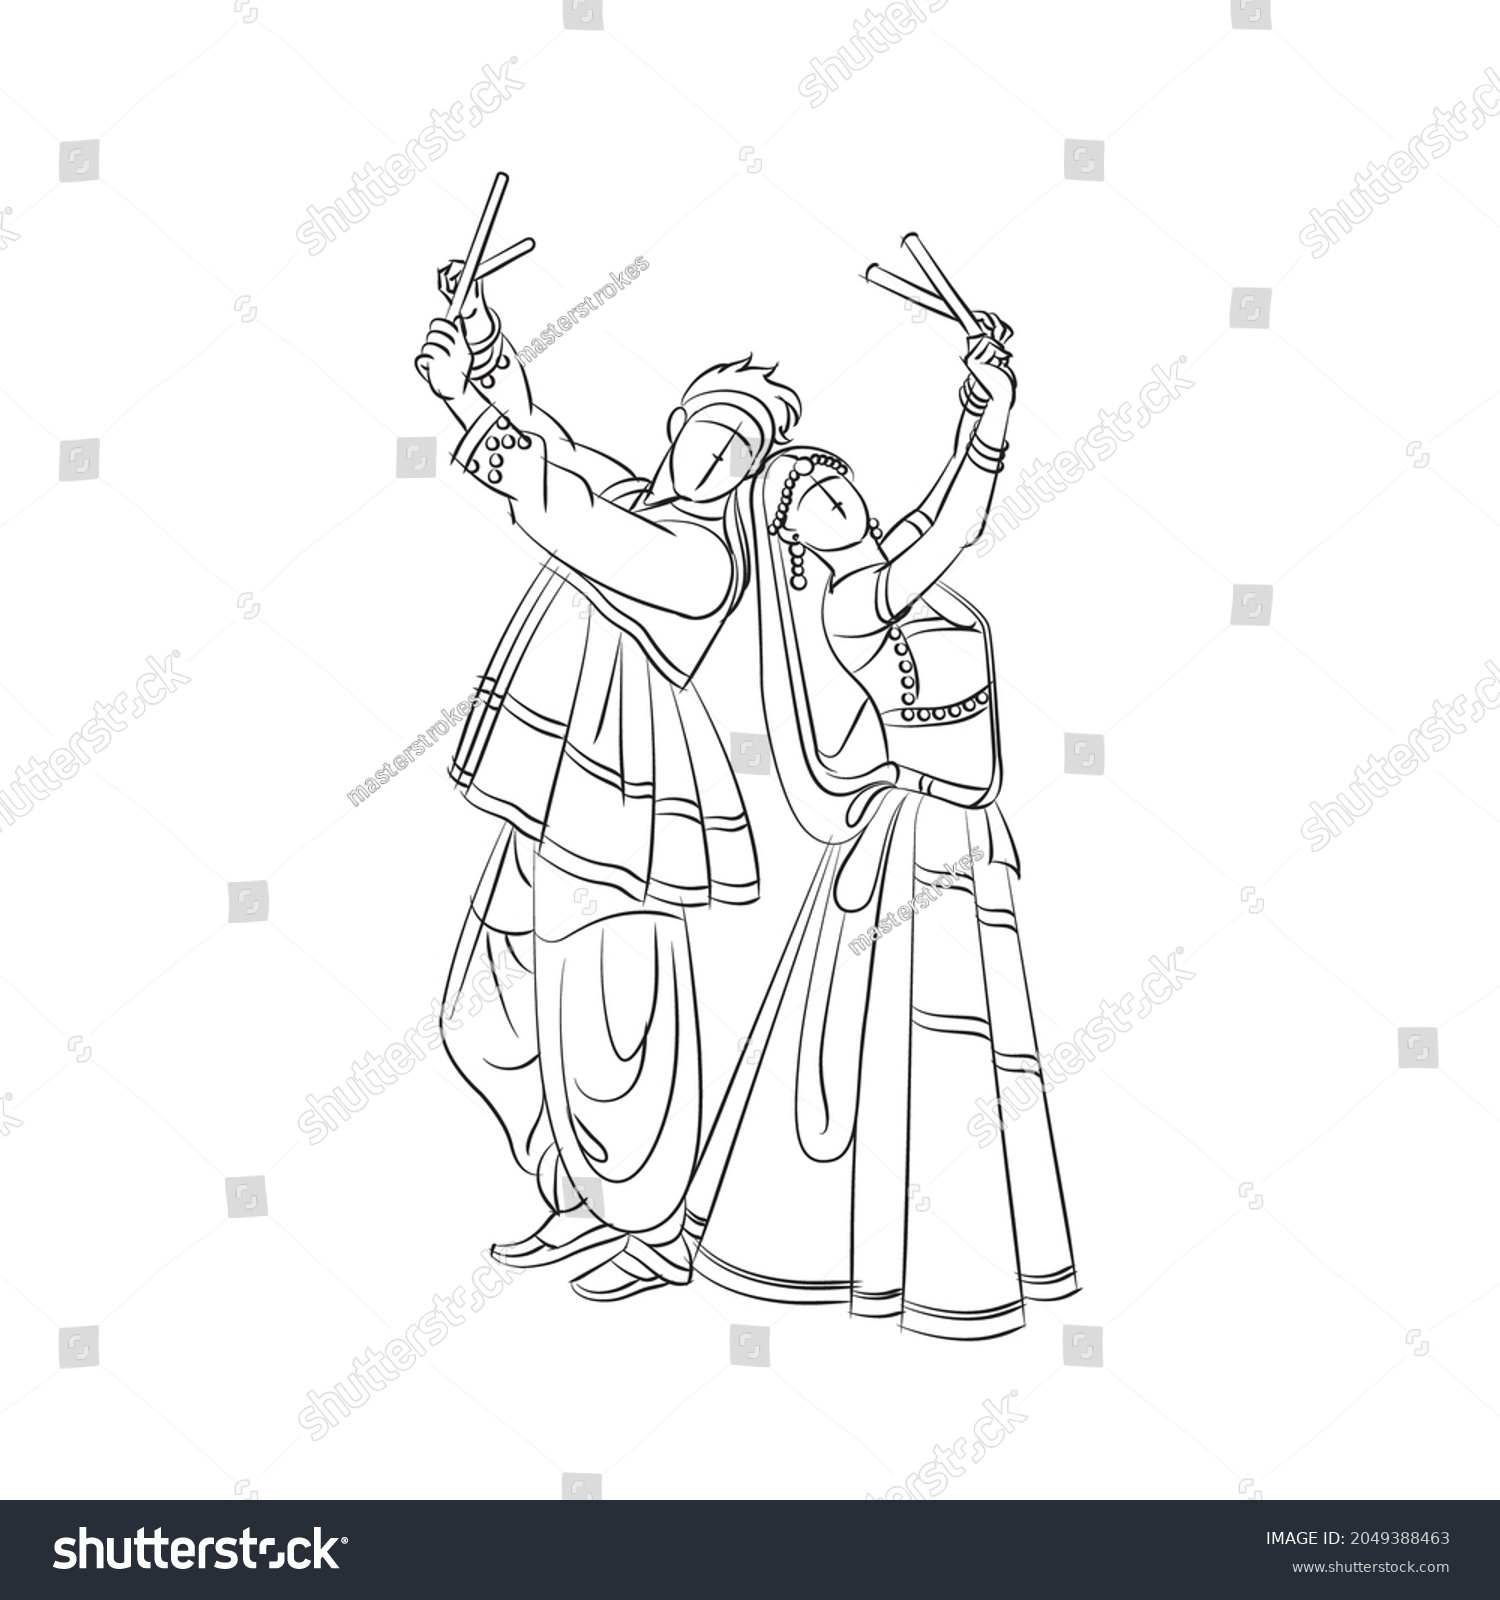 SVG of couple playing dandiya and garba during navratri and durga puja black and white illustration svg